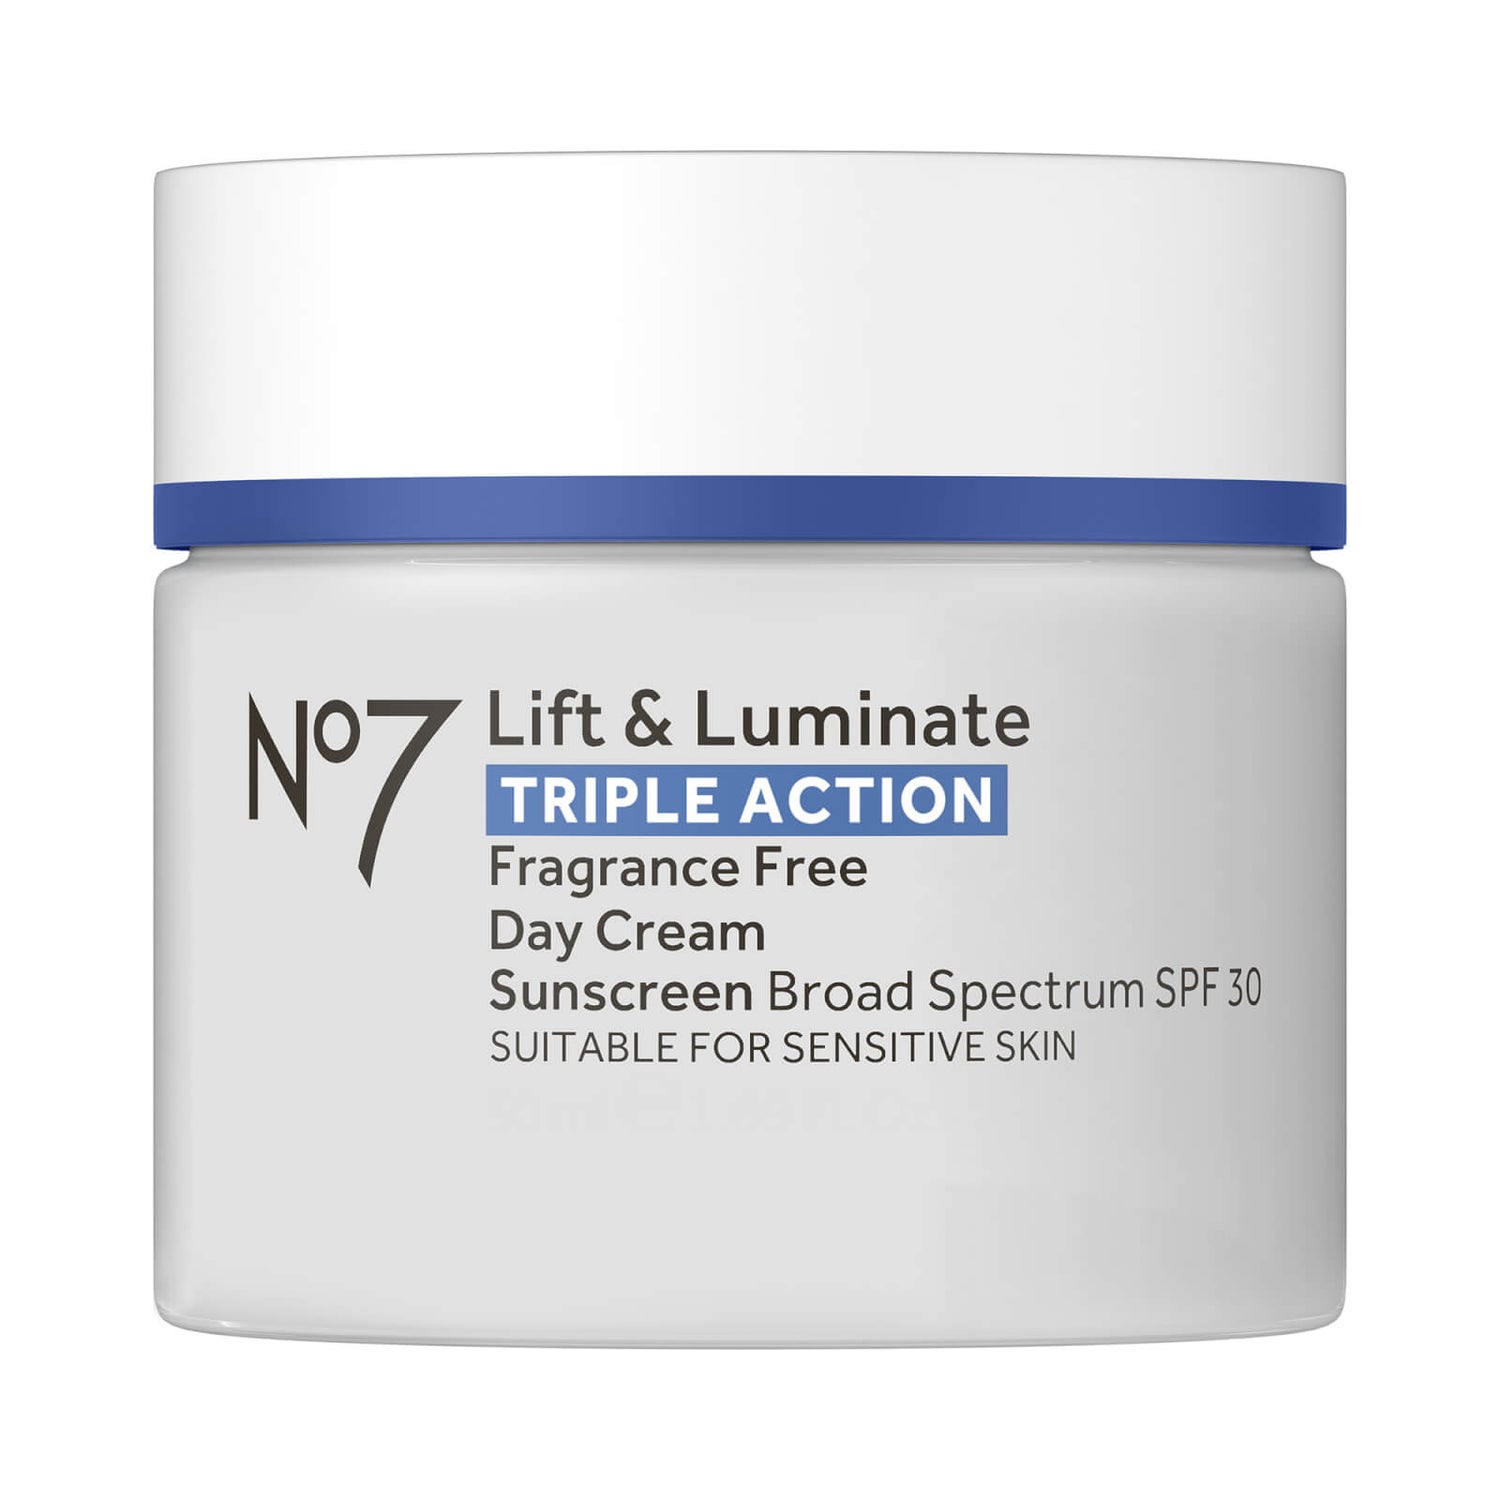 No7 Lift & Luminate Triple Action Fragrance Free Day Cream 50ml